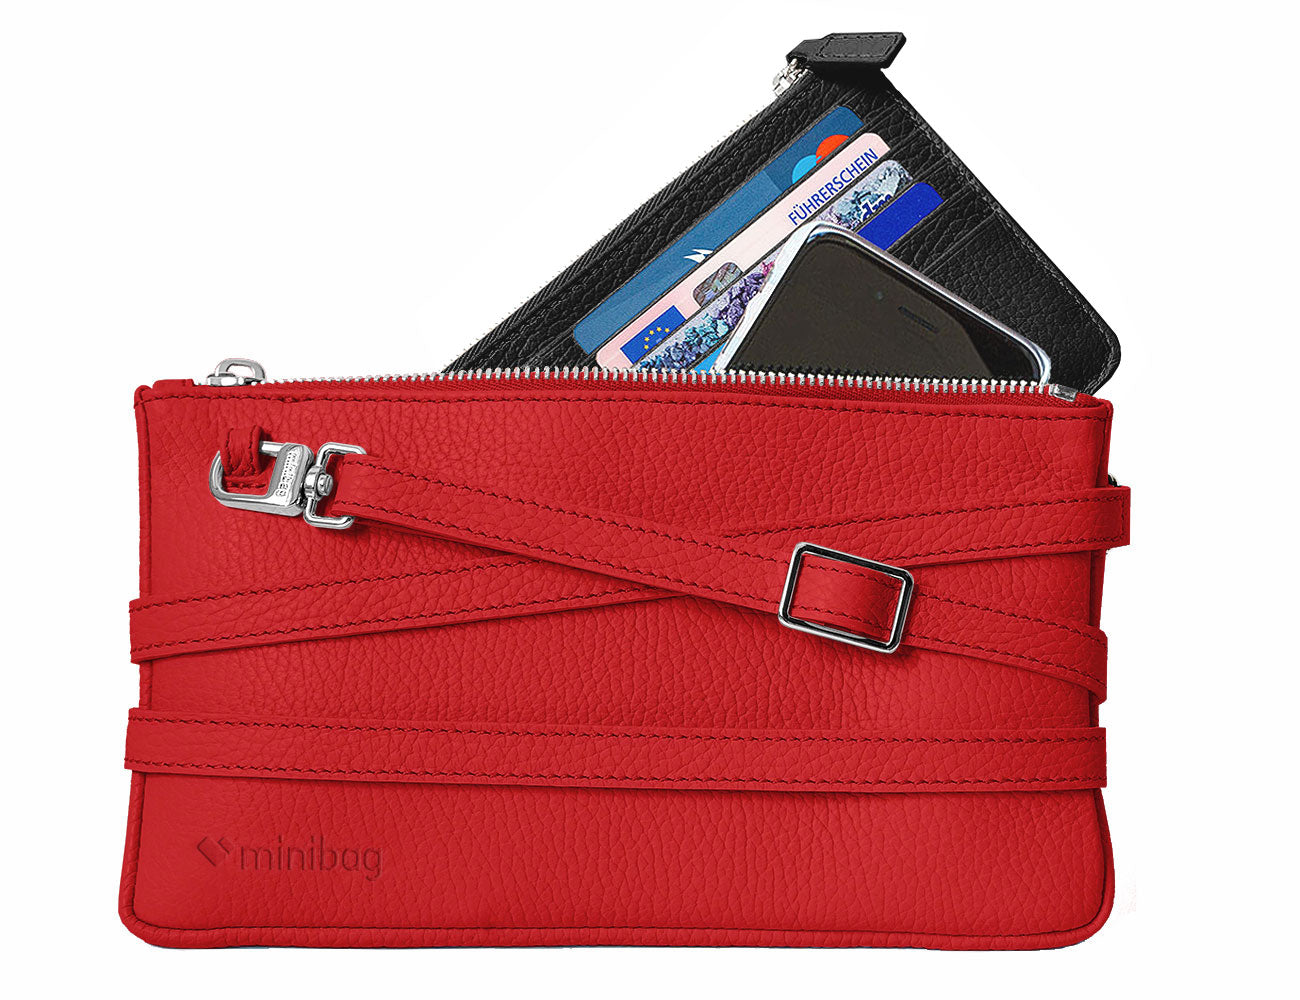 minibag red, Ledertasche rot, Clutch rot, minibag Wallet schwarz, Geldtasche zum Umhängen, minibag